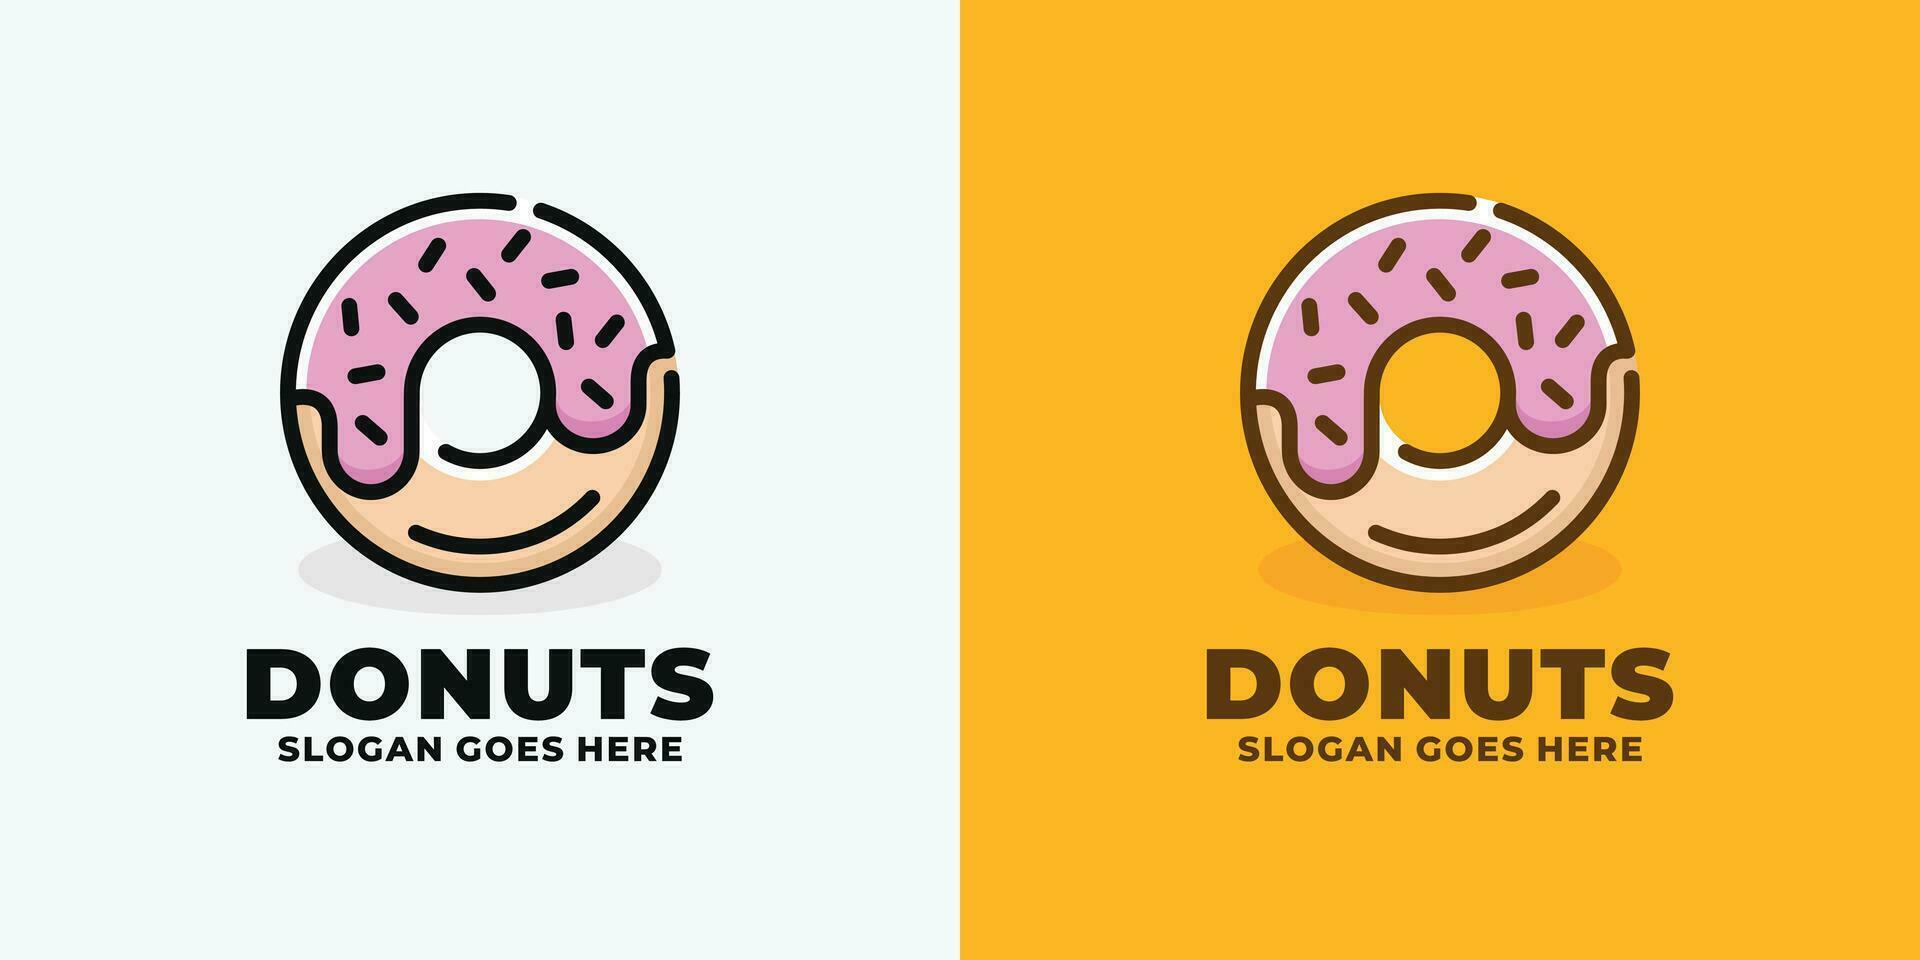 Donut logo design vector illustration